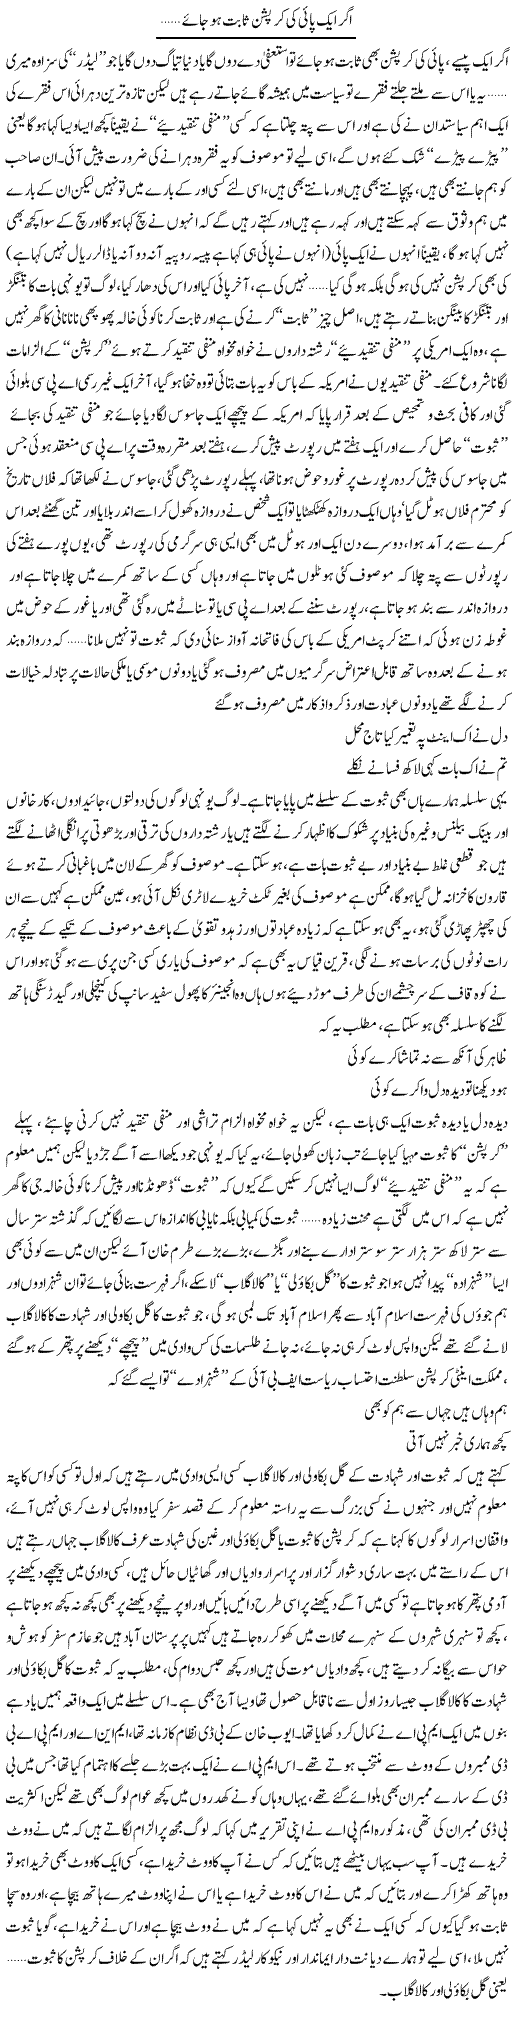 Agar Aik Payi Ki Corruption Saabit Ho Jaye | Saad Ullah Jan Barq | Daily Urdu Columns